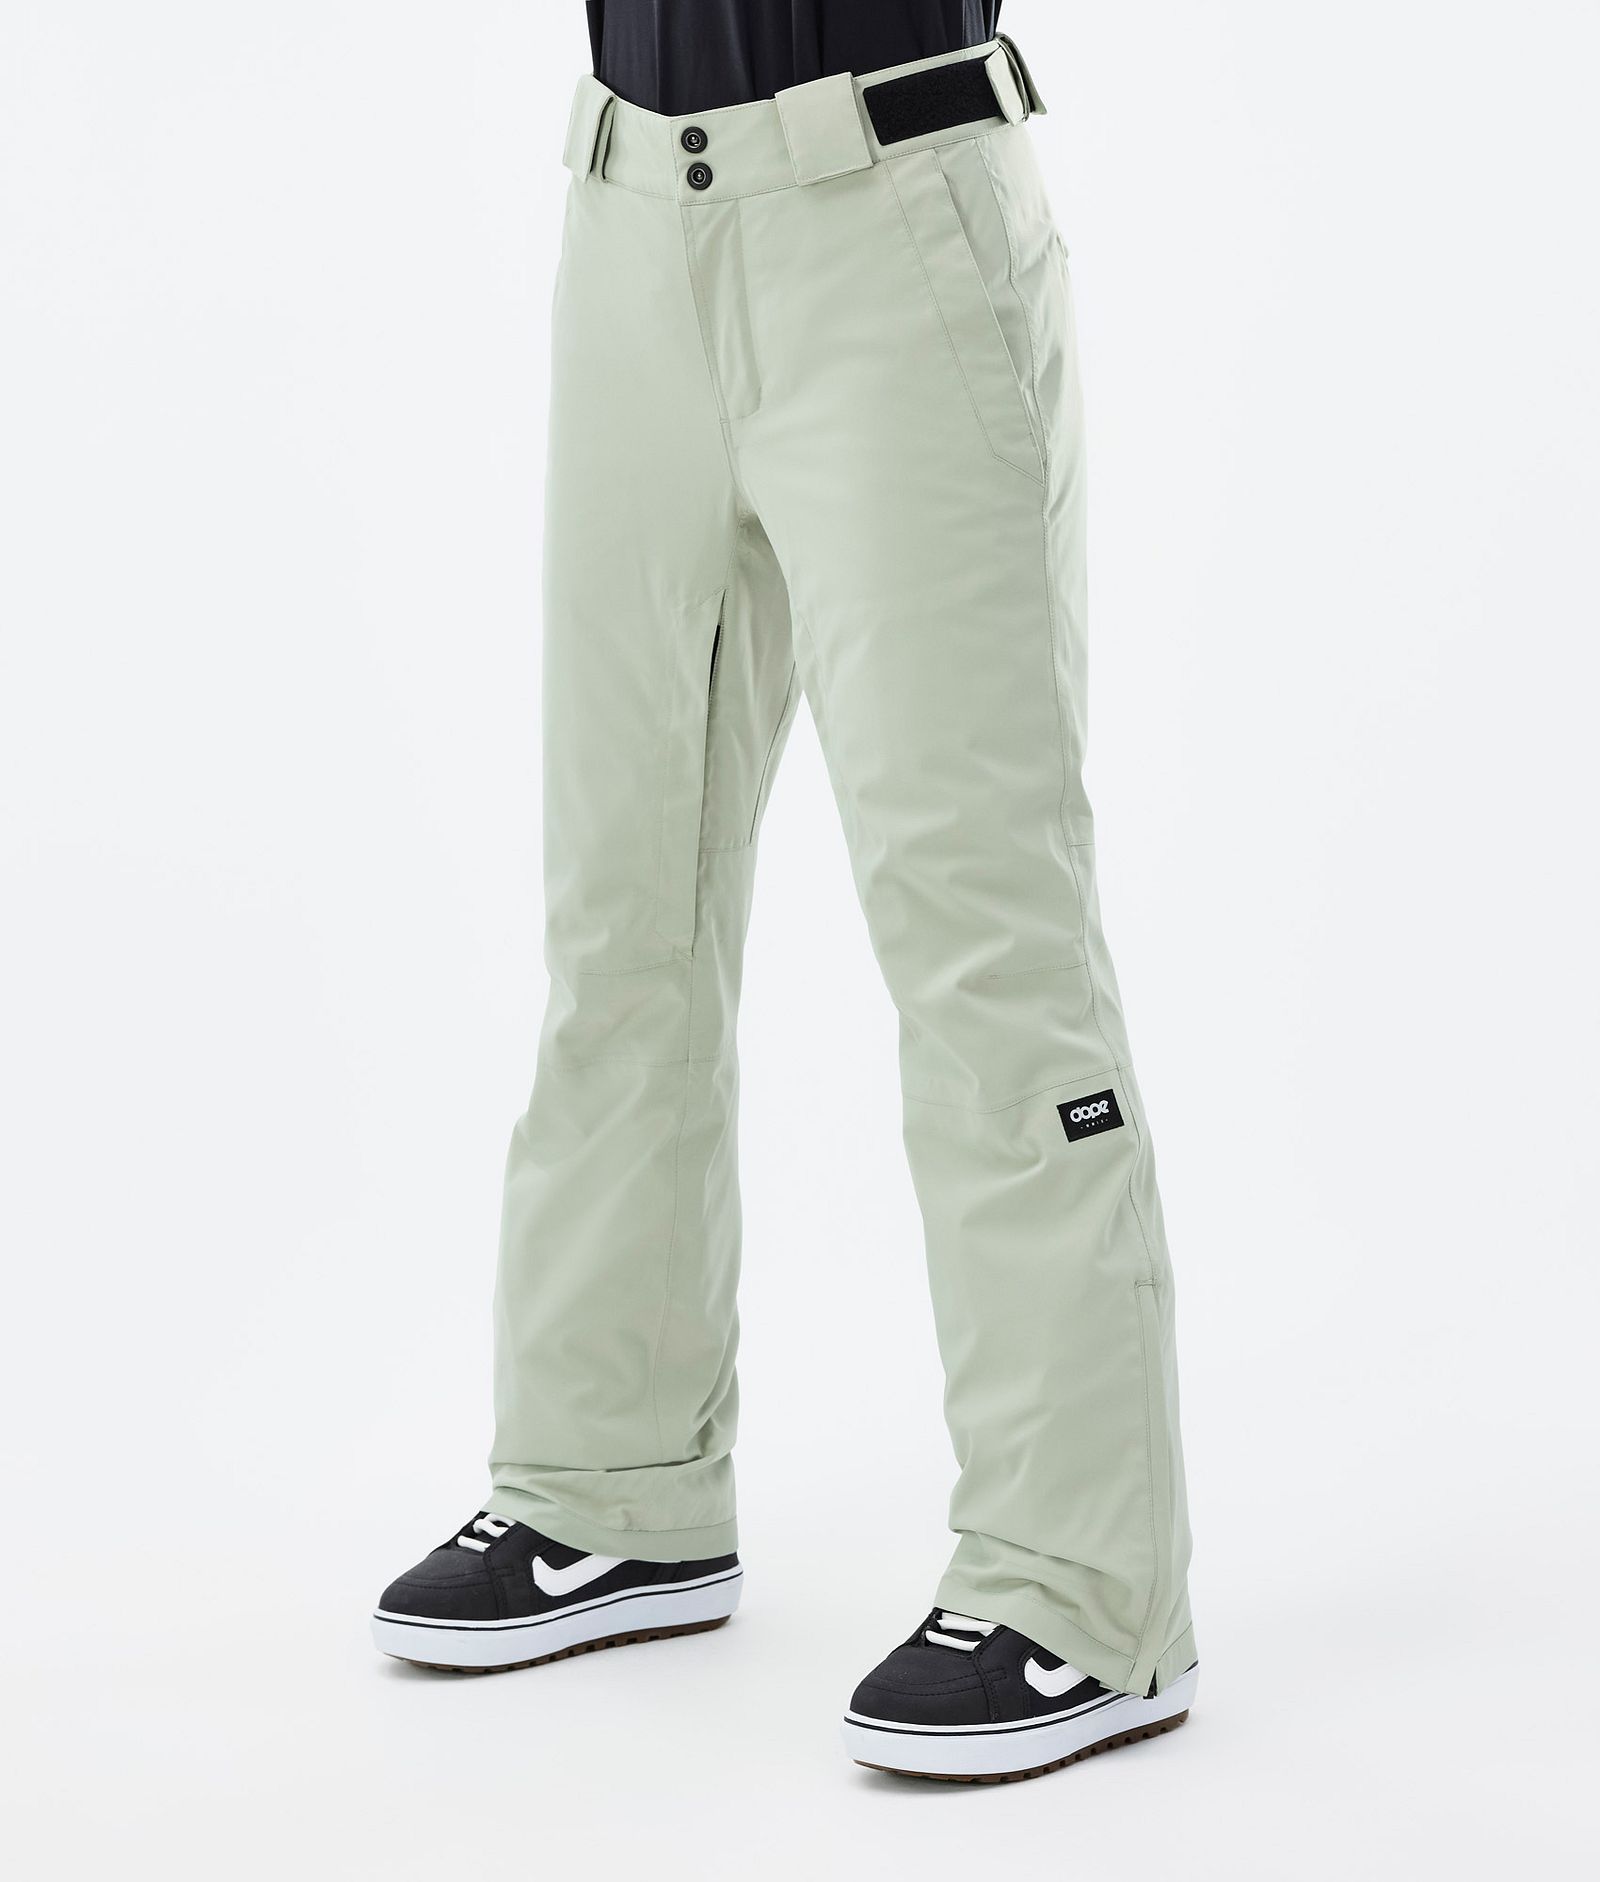 Con W 2022 Pantalon de Snowboard Femme Soft Green Renewed, Image 1 sur 5